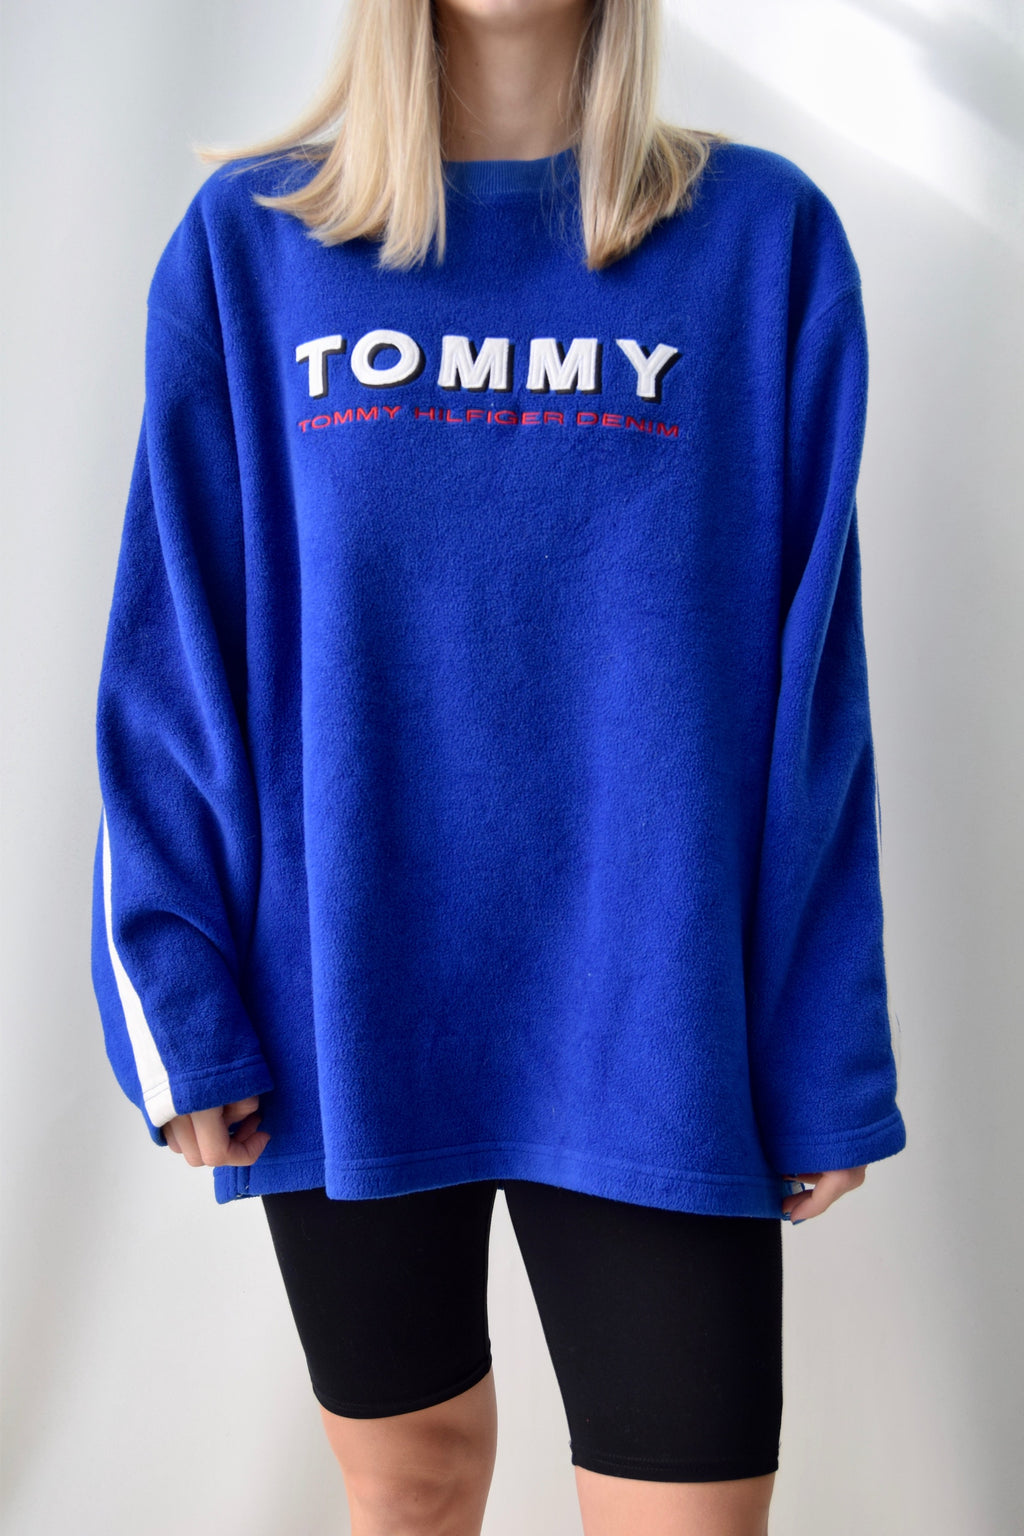 Tommy Hilfiger Fleece Sweatshirt